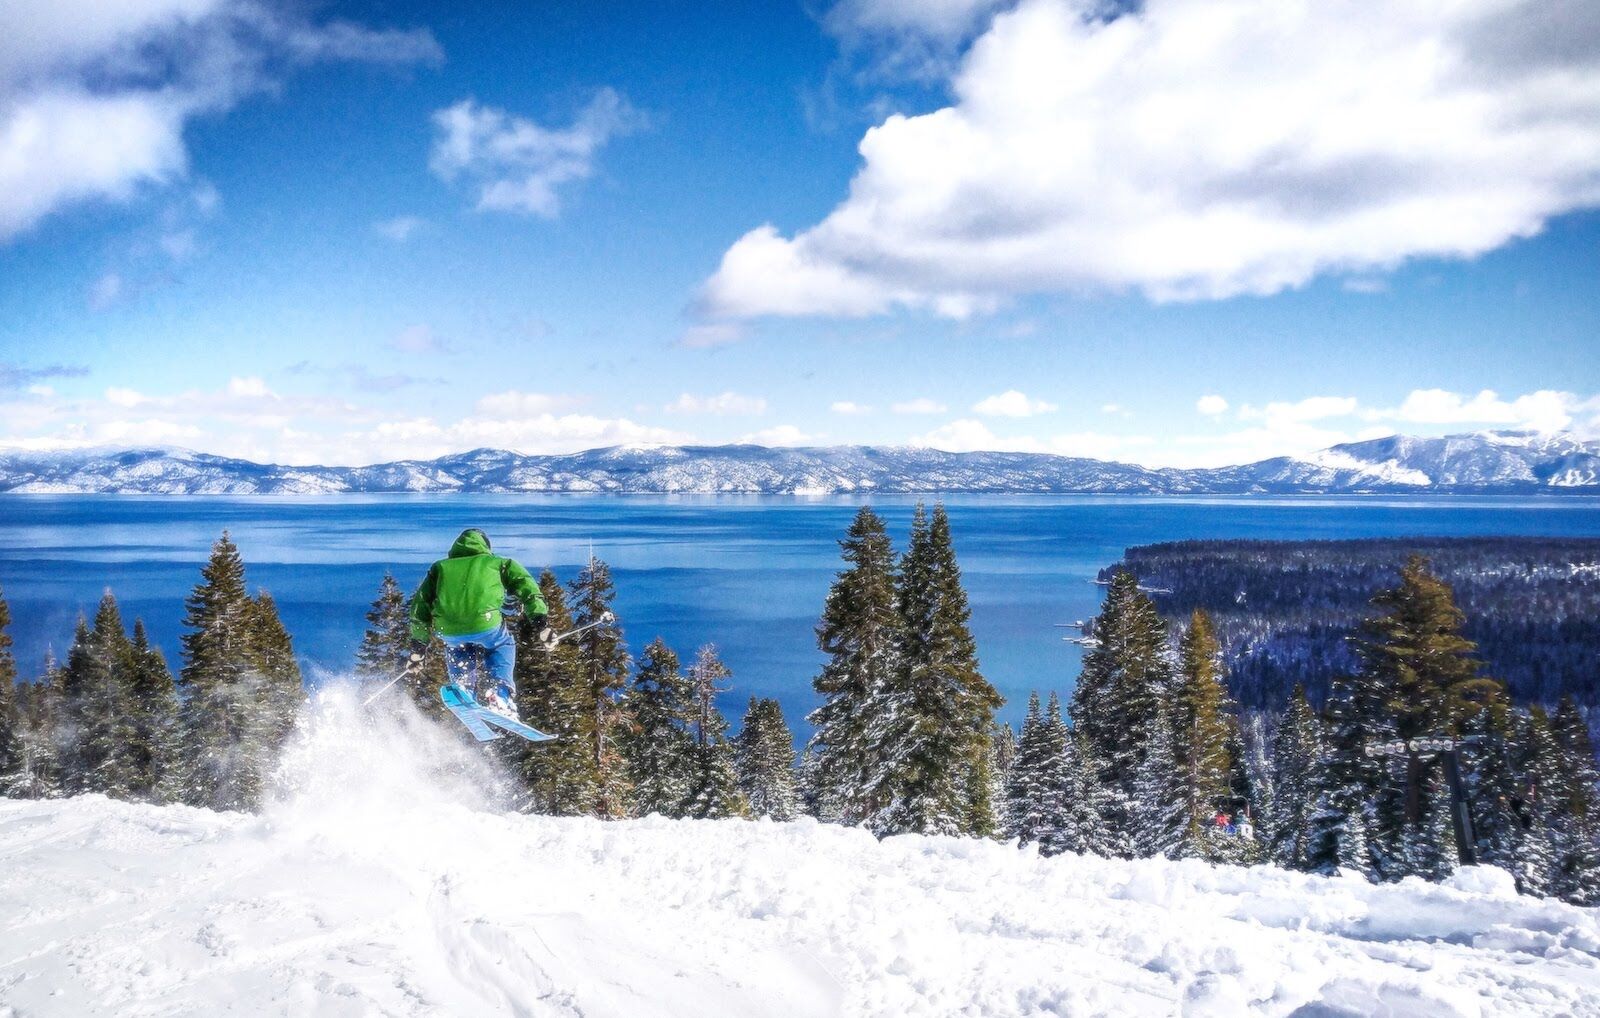 skier getting air at homewood, one of the lake tahoe ski resorts